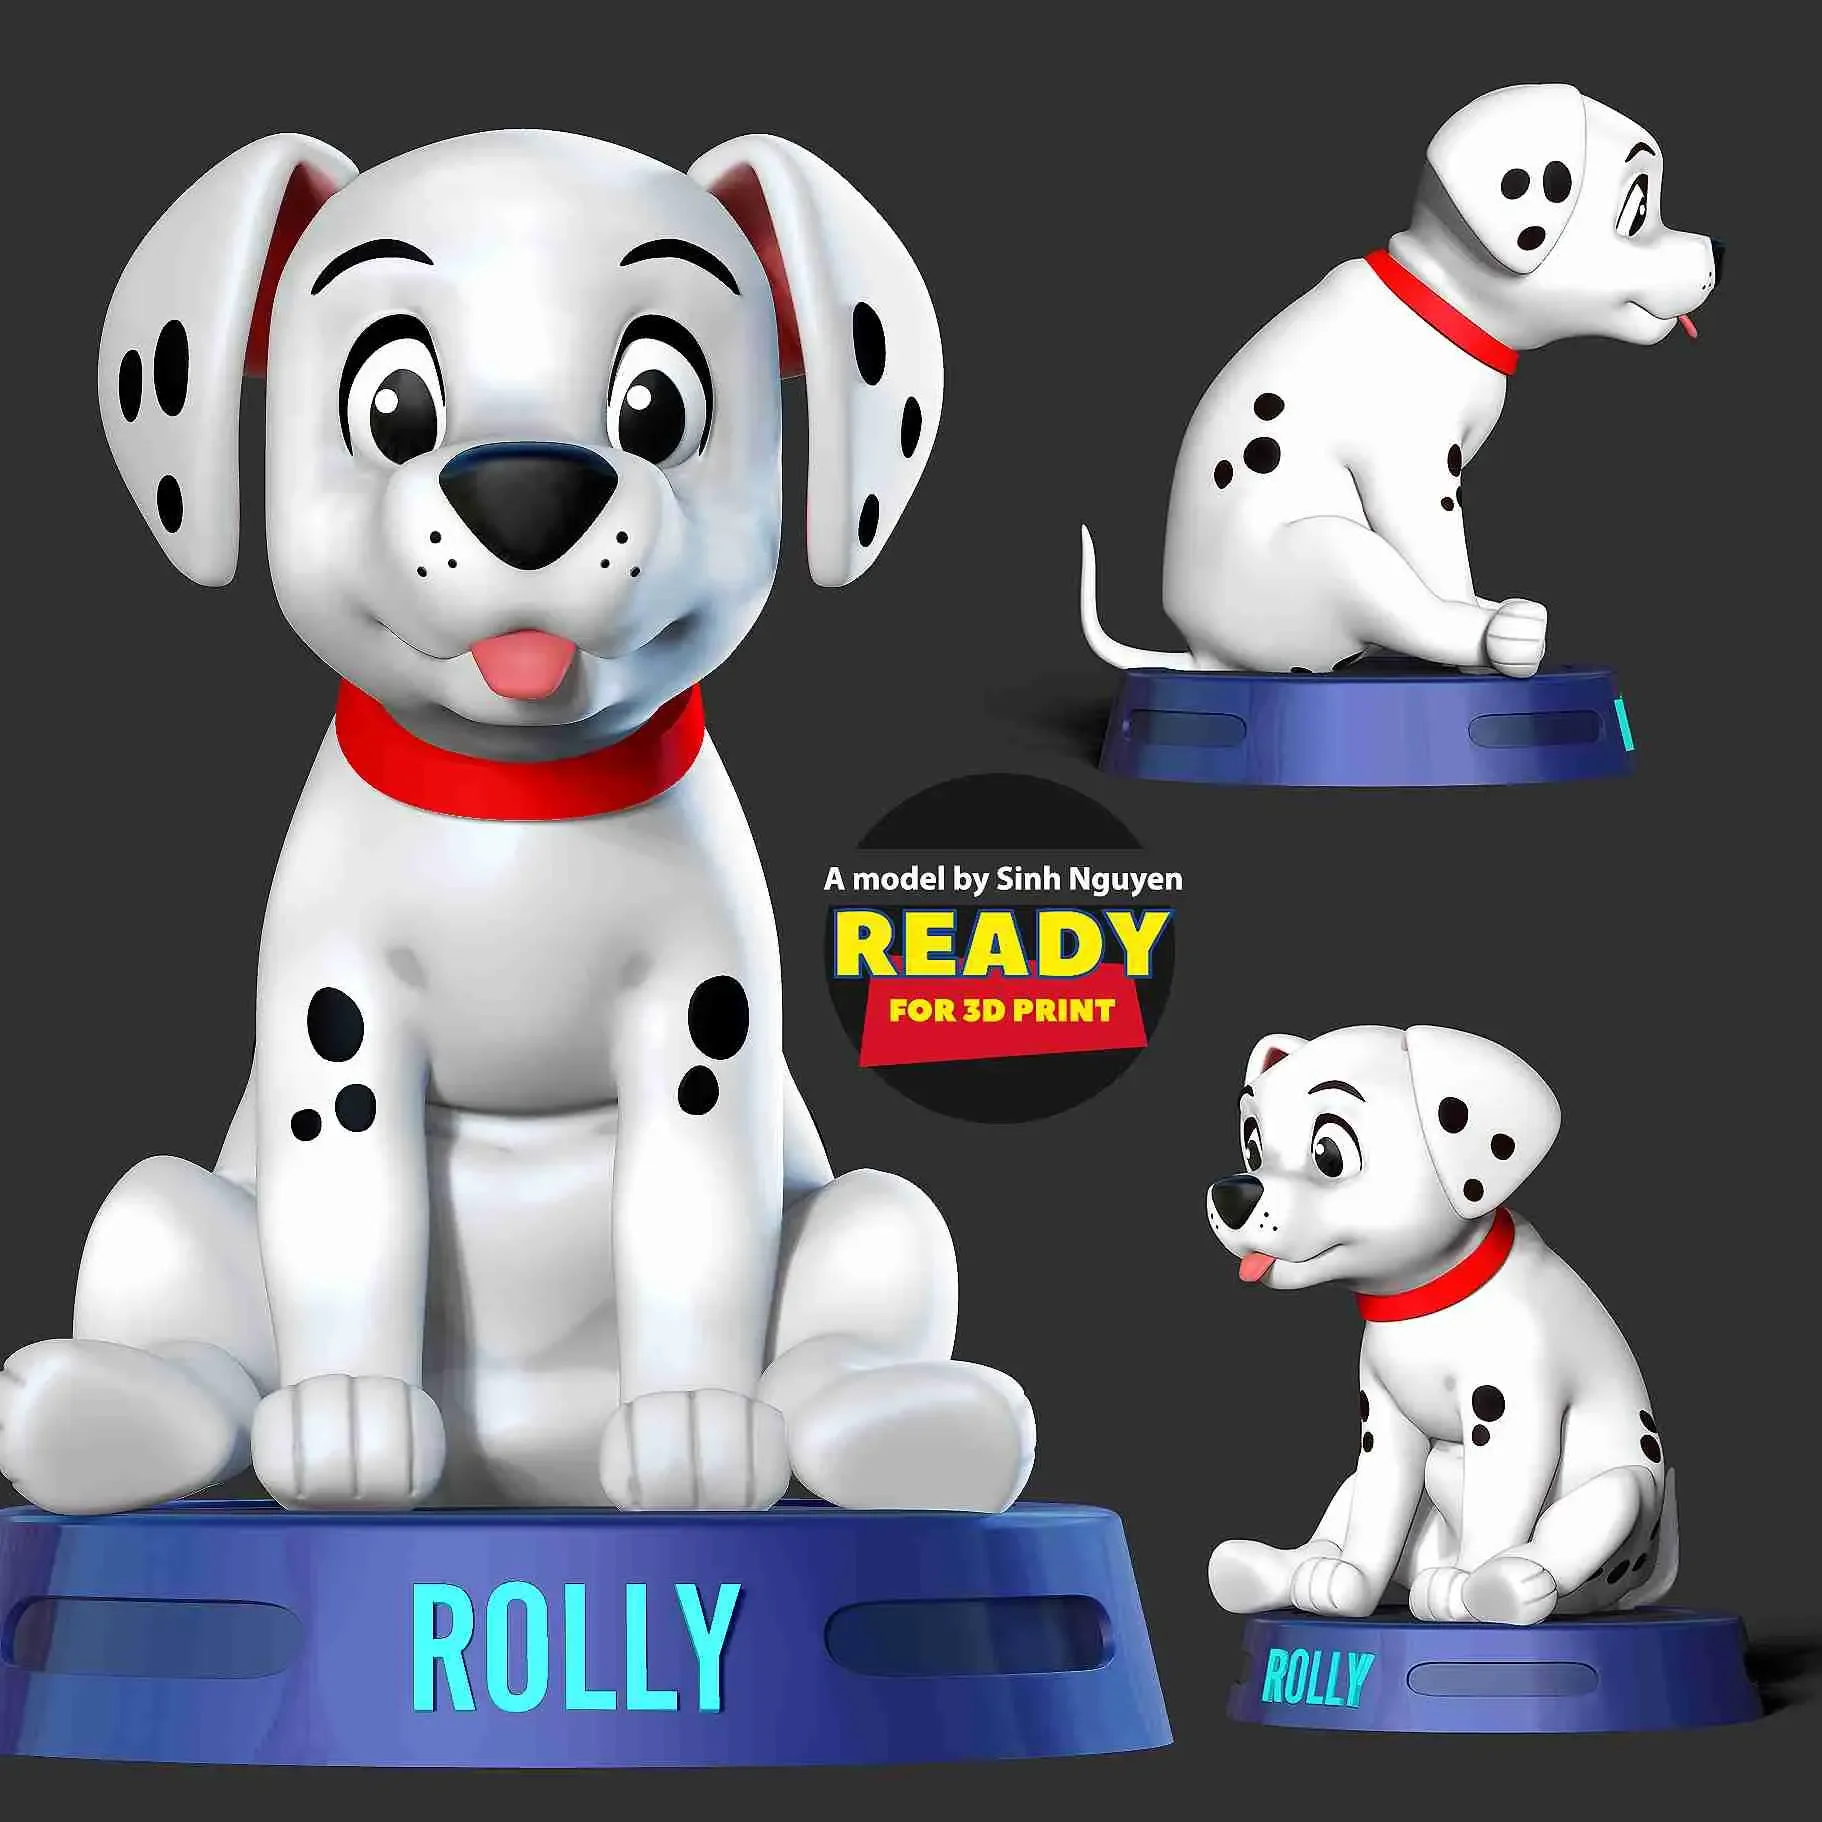 Rolly - 101 dalmatians